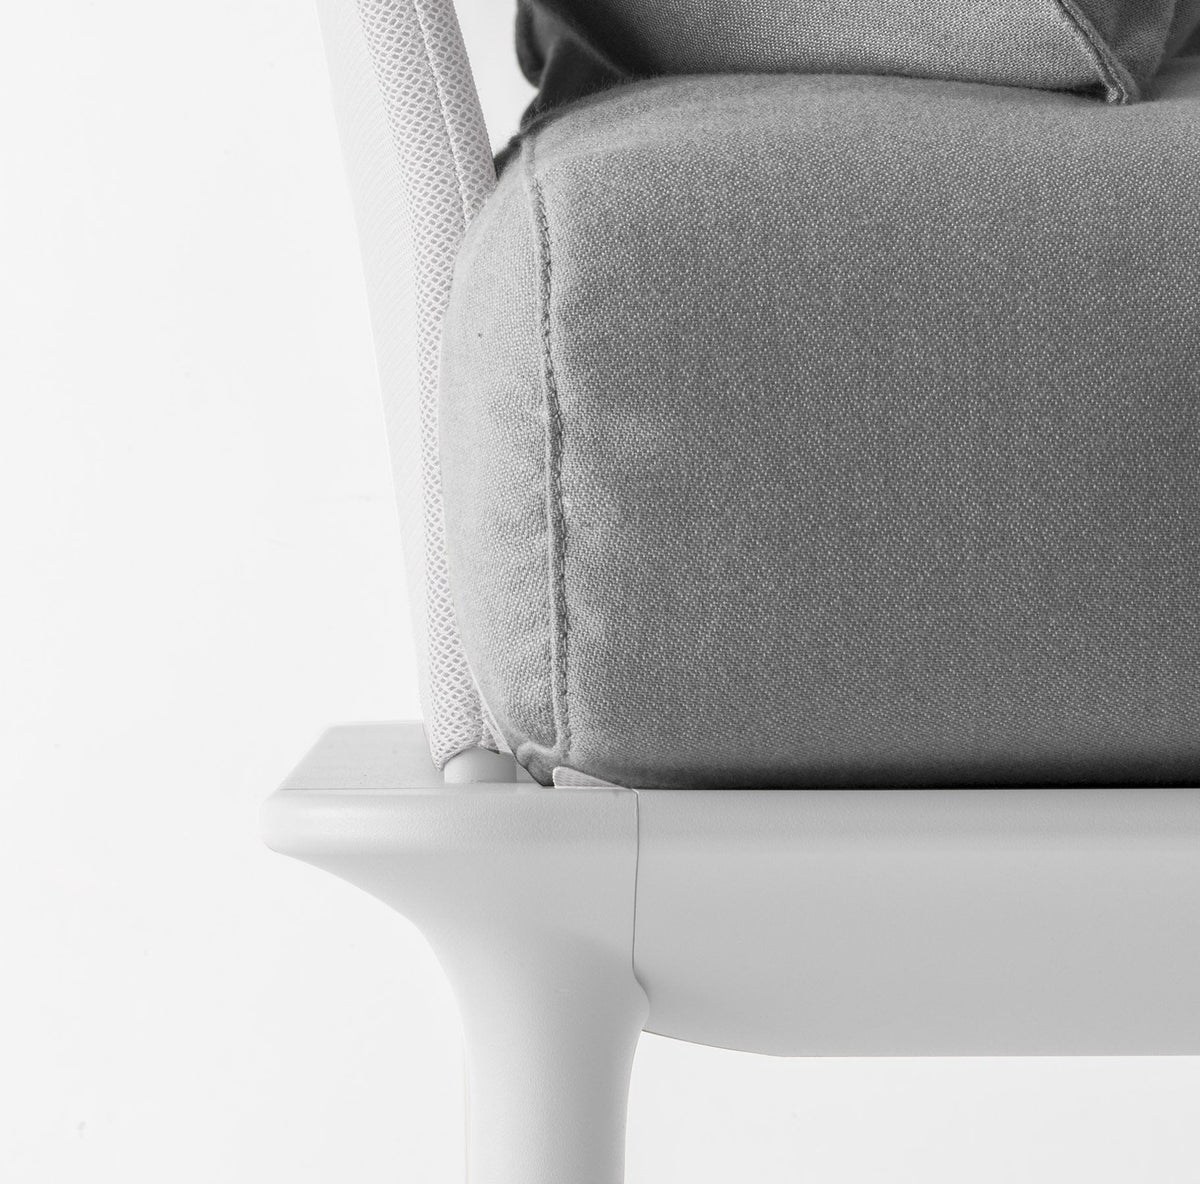 Reva Lounge Chair-Pedrali-Contract Furniture Store